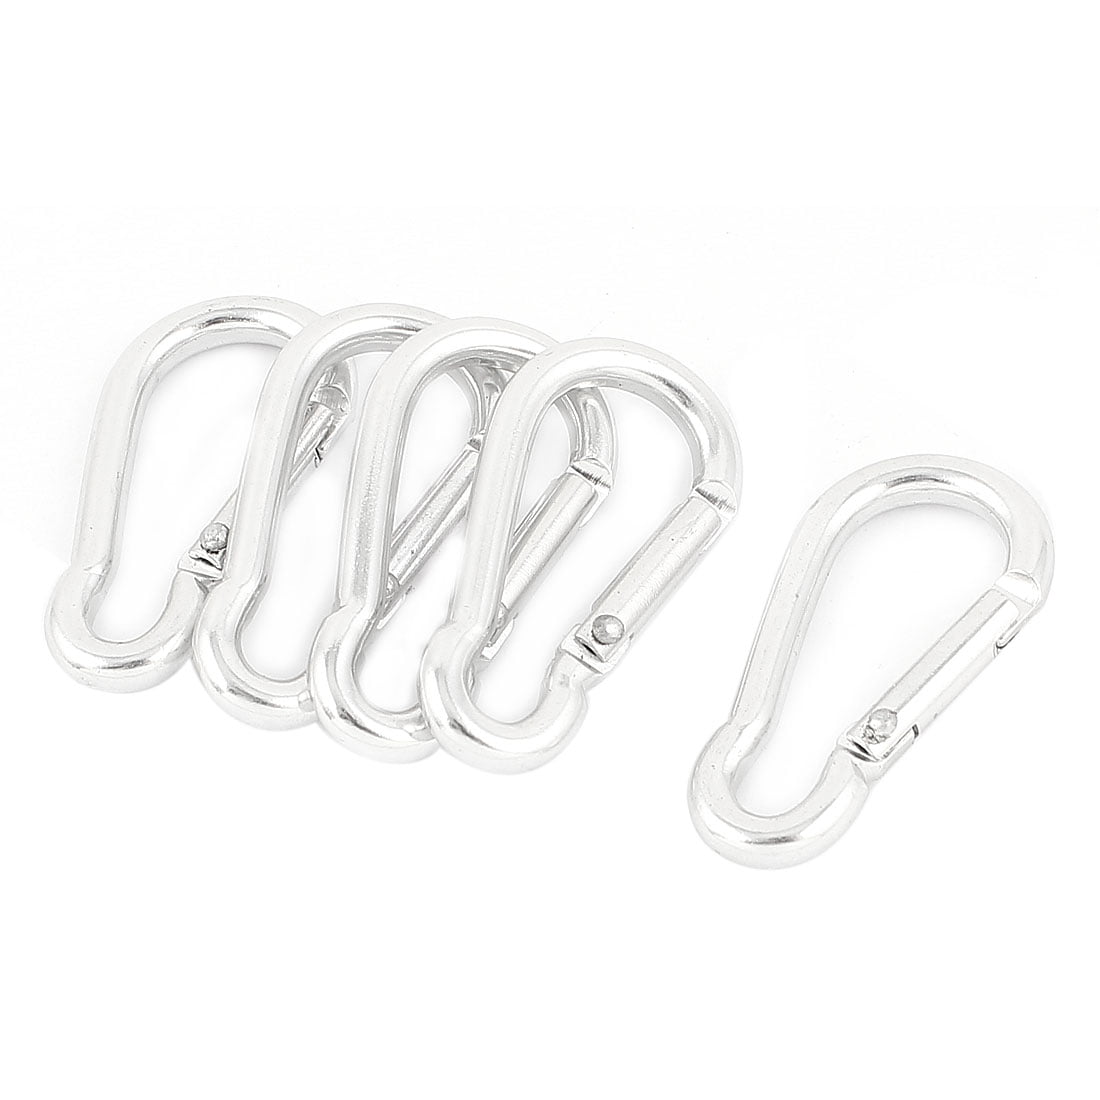 25Pcs Aluminum Snap Hook Carabiner D-Ring Key Chain Clip Keychain Hiking Camp CA